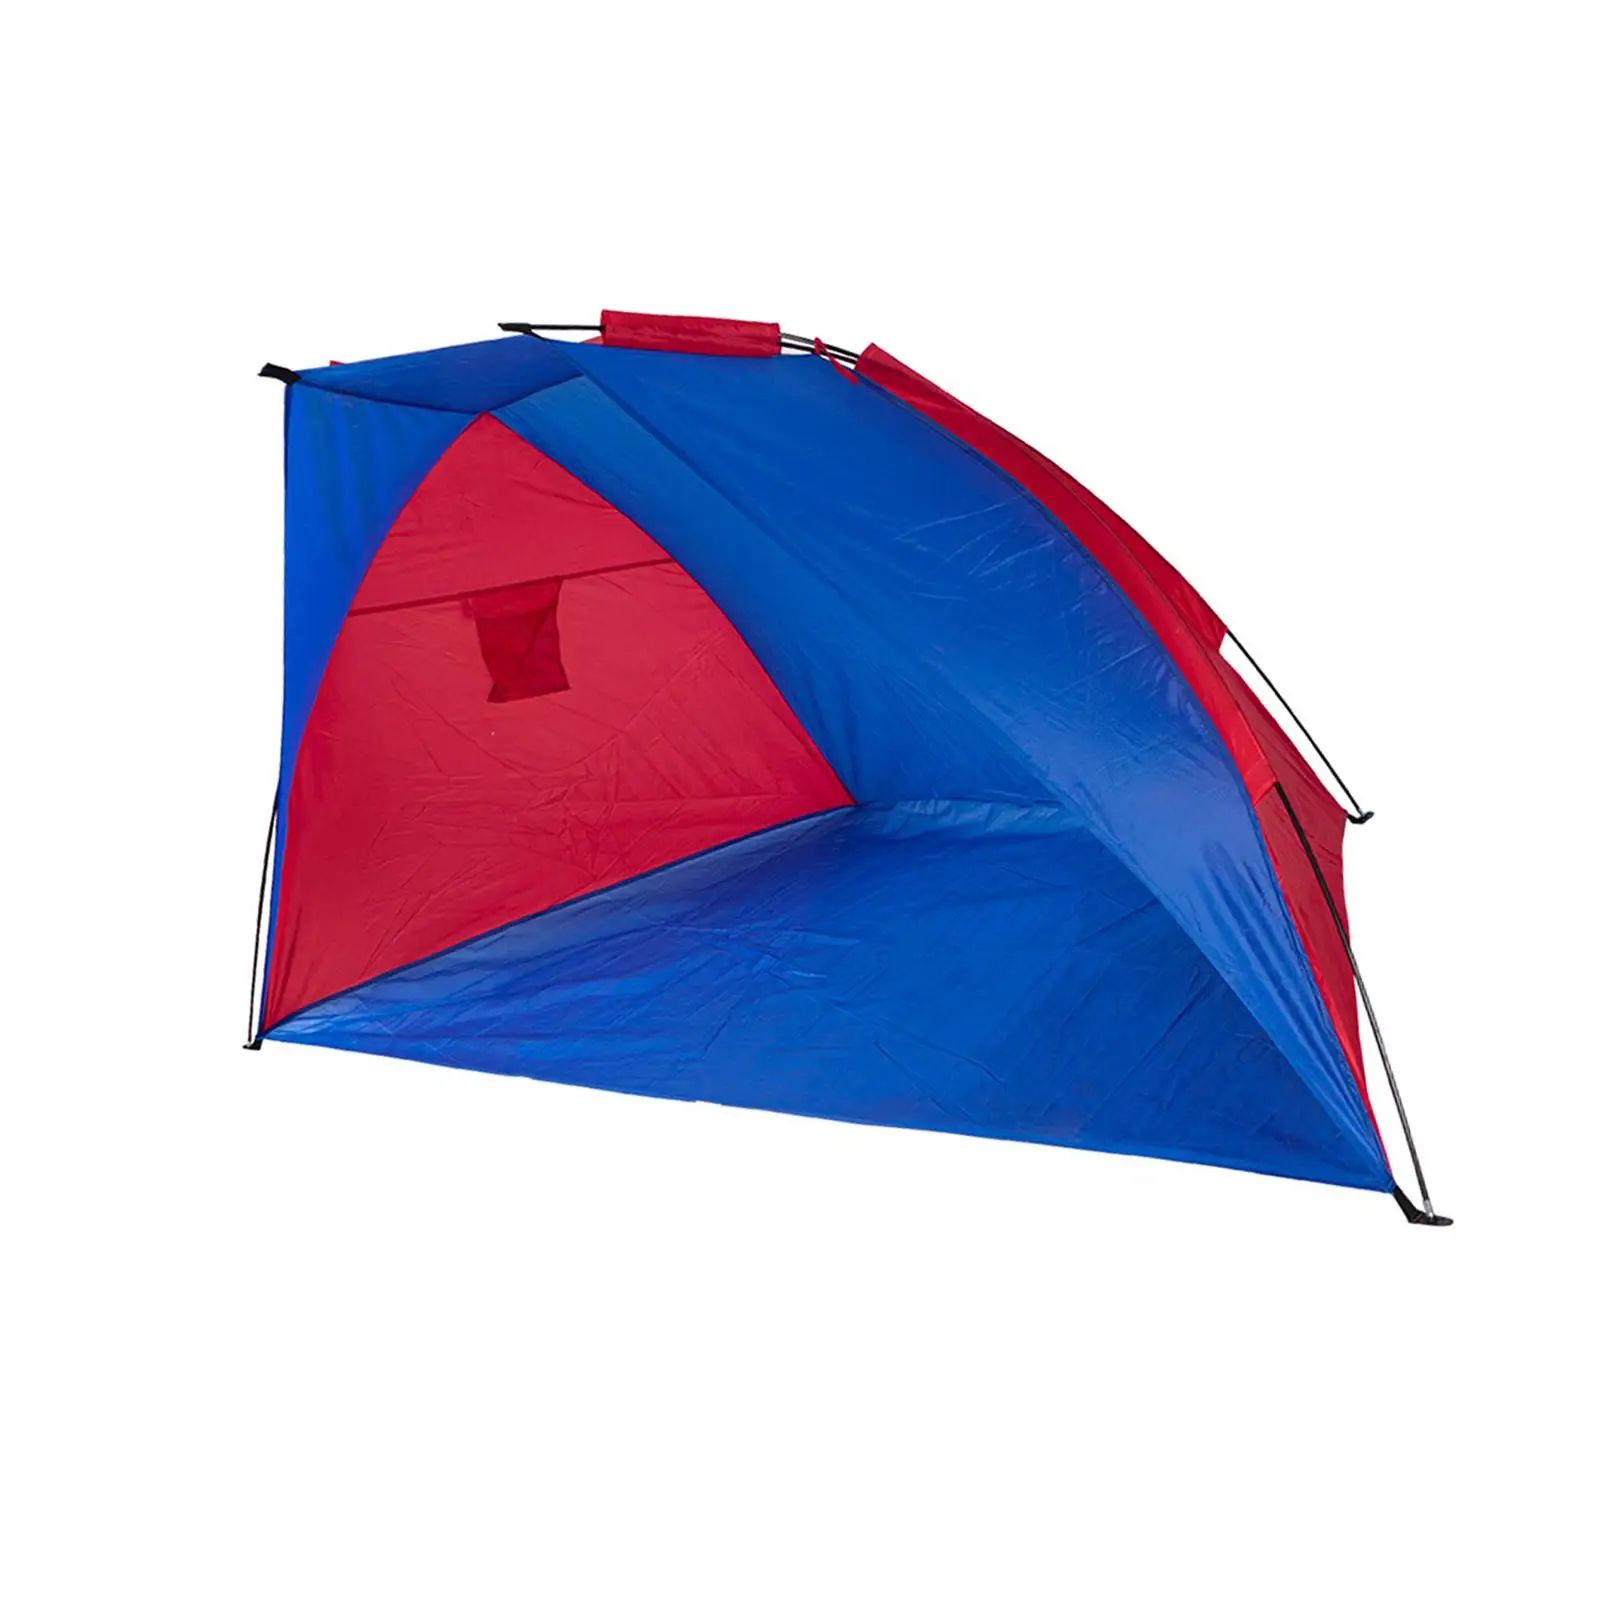 Heavy Duty Sun Shade Tent Canopy Camping Outdoor Hiking Sun Protection Awning Beach Sun Shelter for Summer Backyard Yard Travel